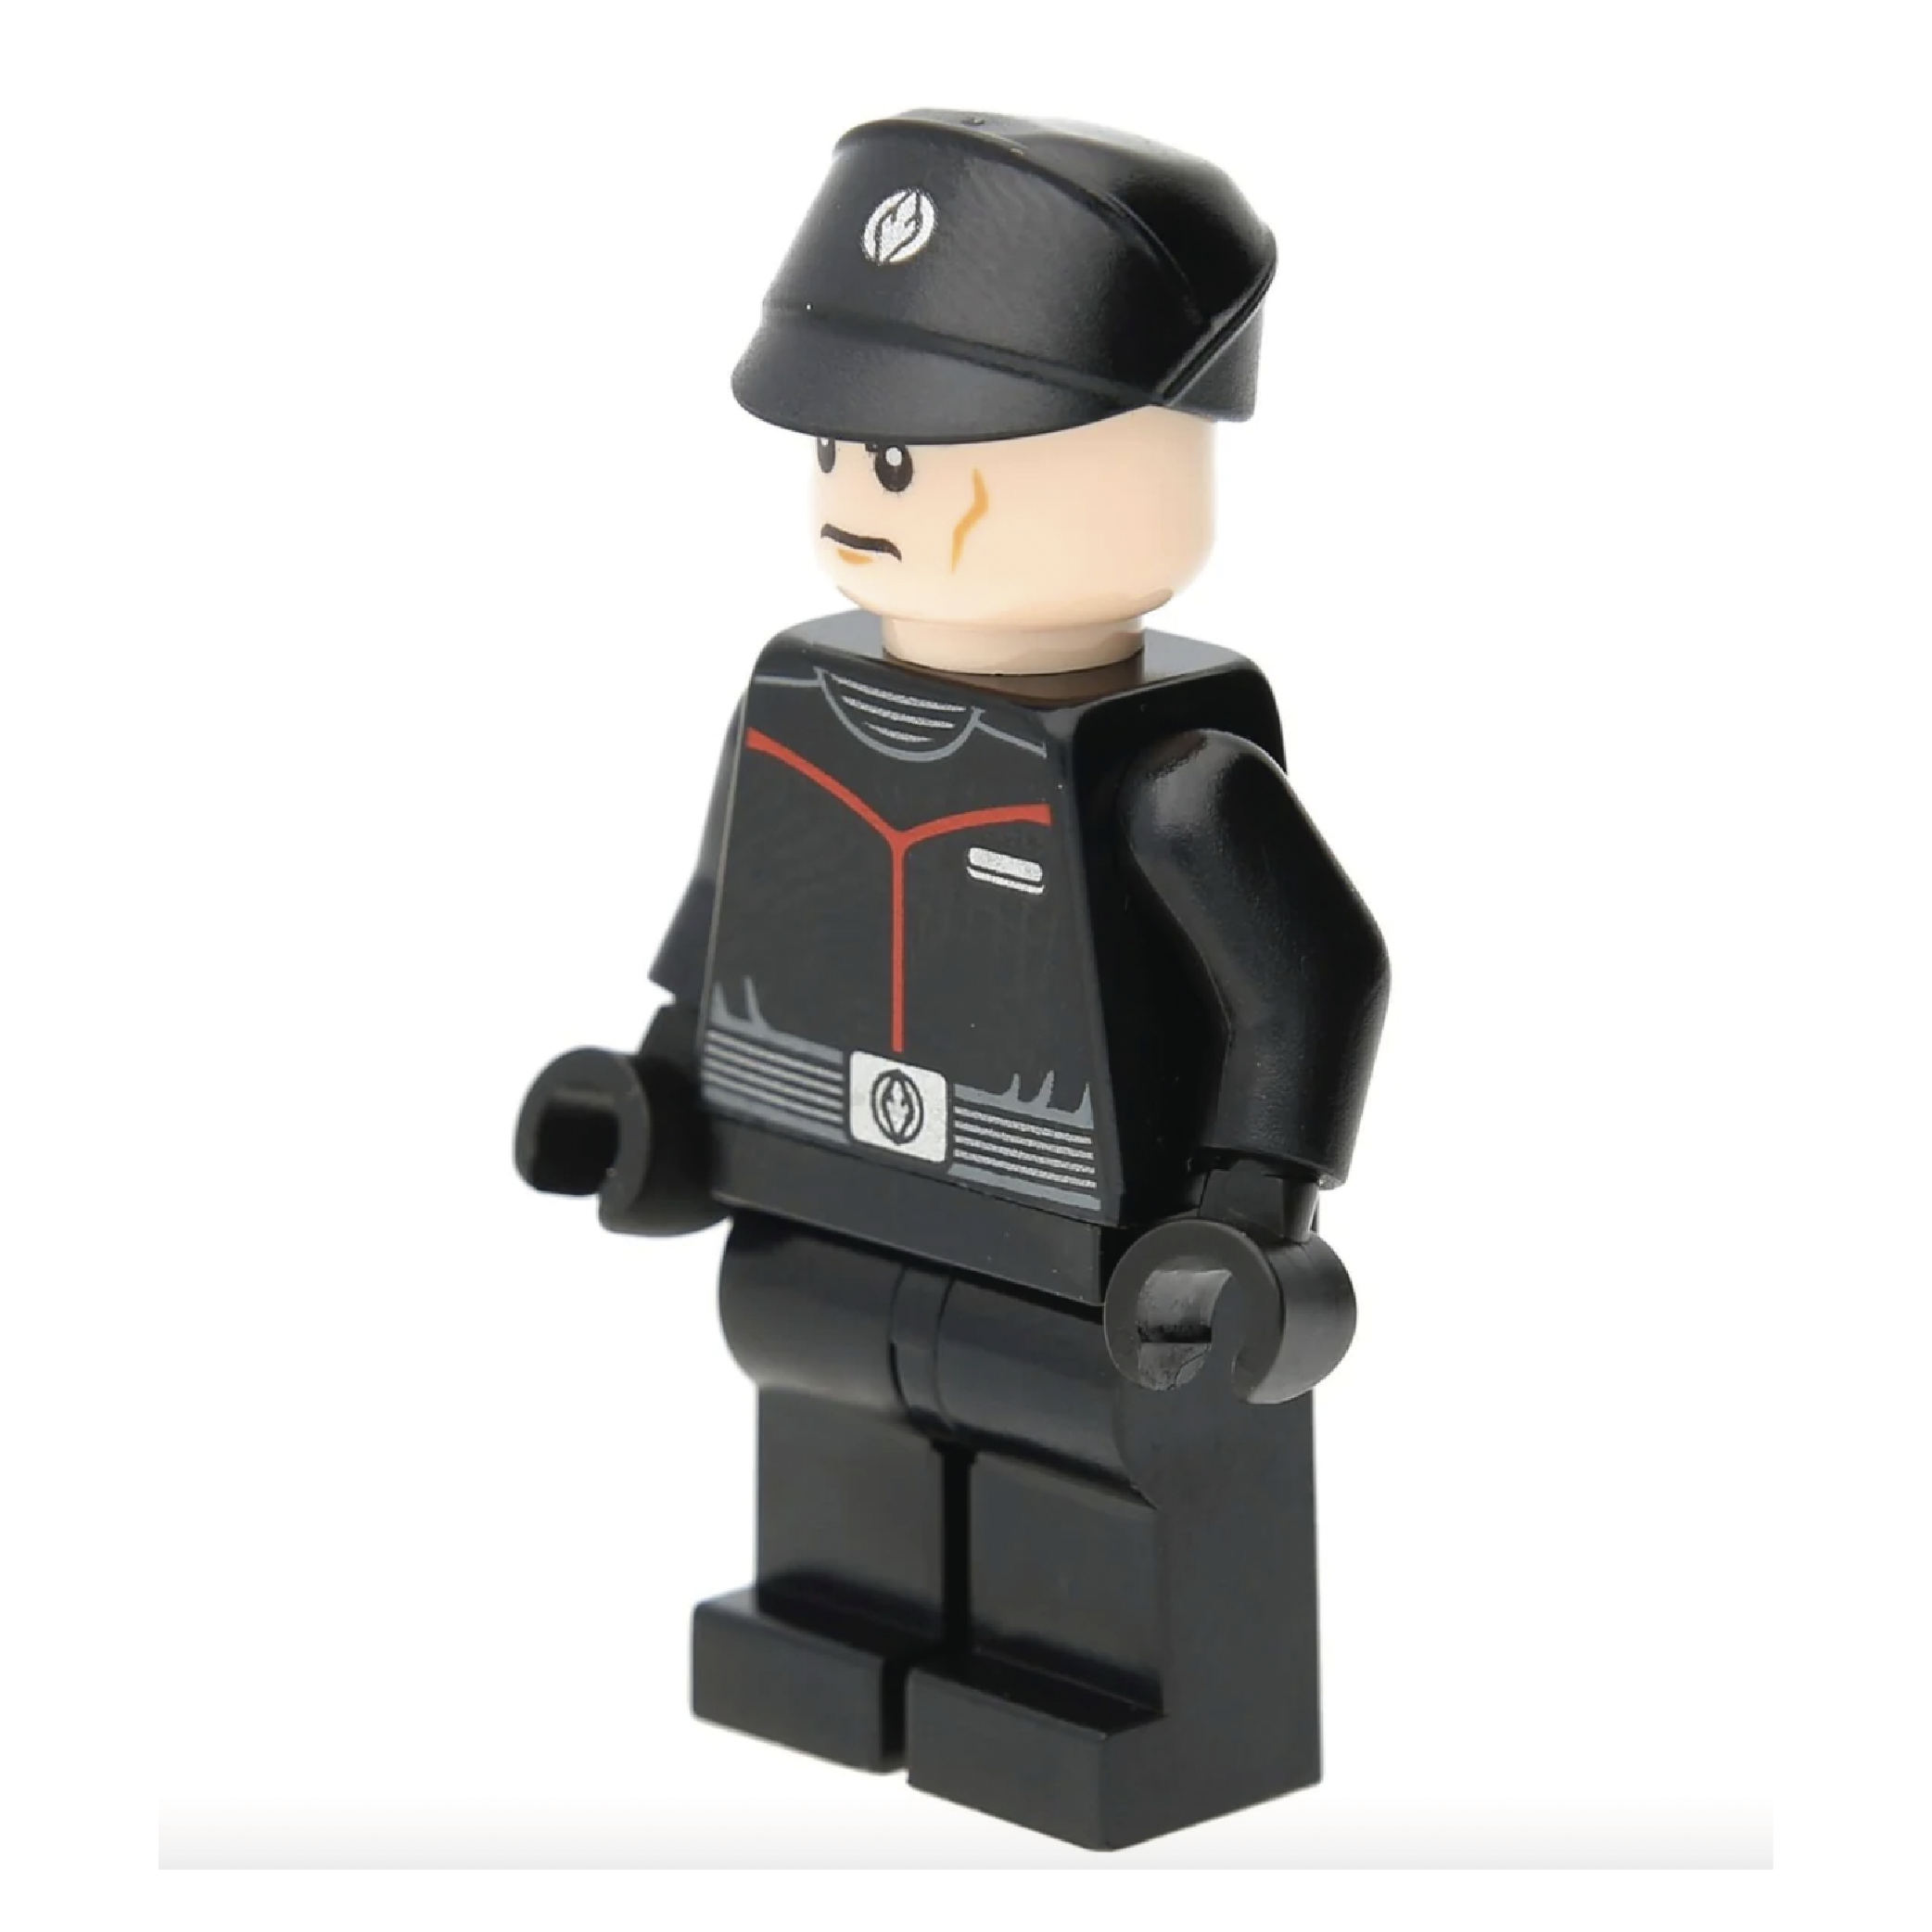 Minifigura LEGO® Star Wars: Oficial de la flota Sith